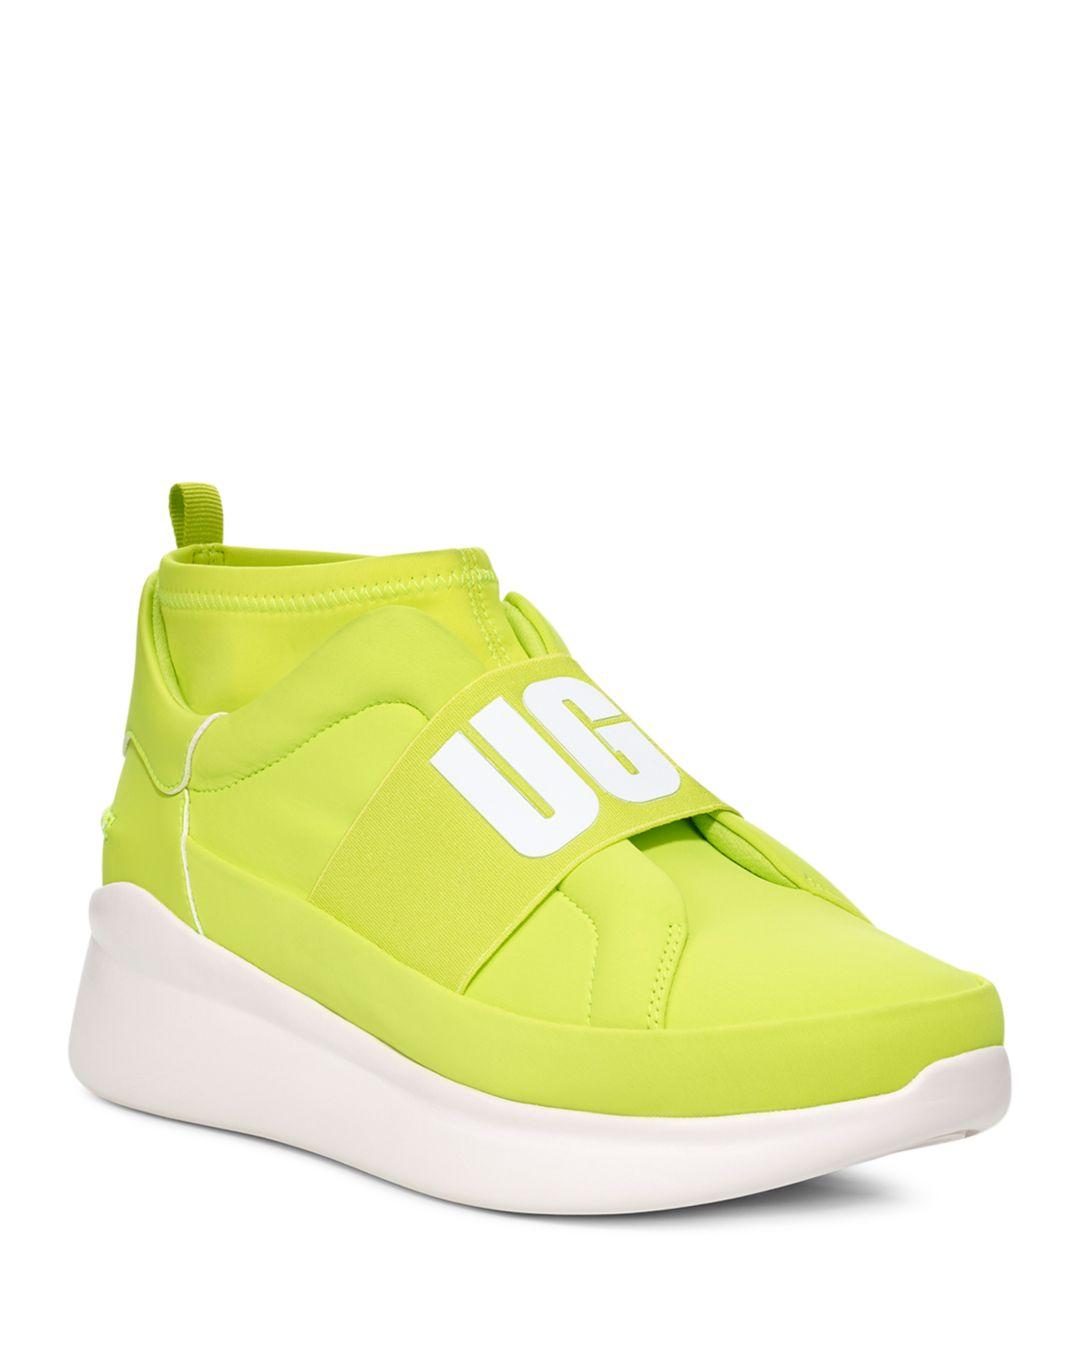 UGG Suede Women's Neutra Neon Sneakers in Neon Yellow (Yellow) - Lyst